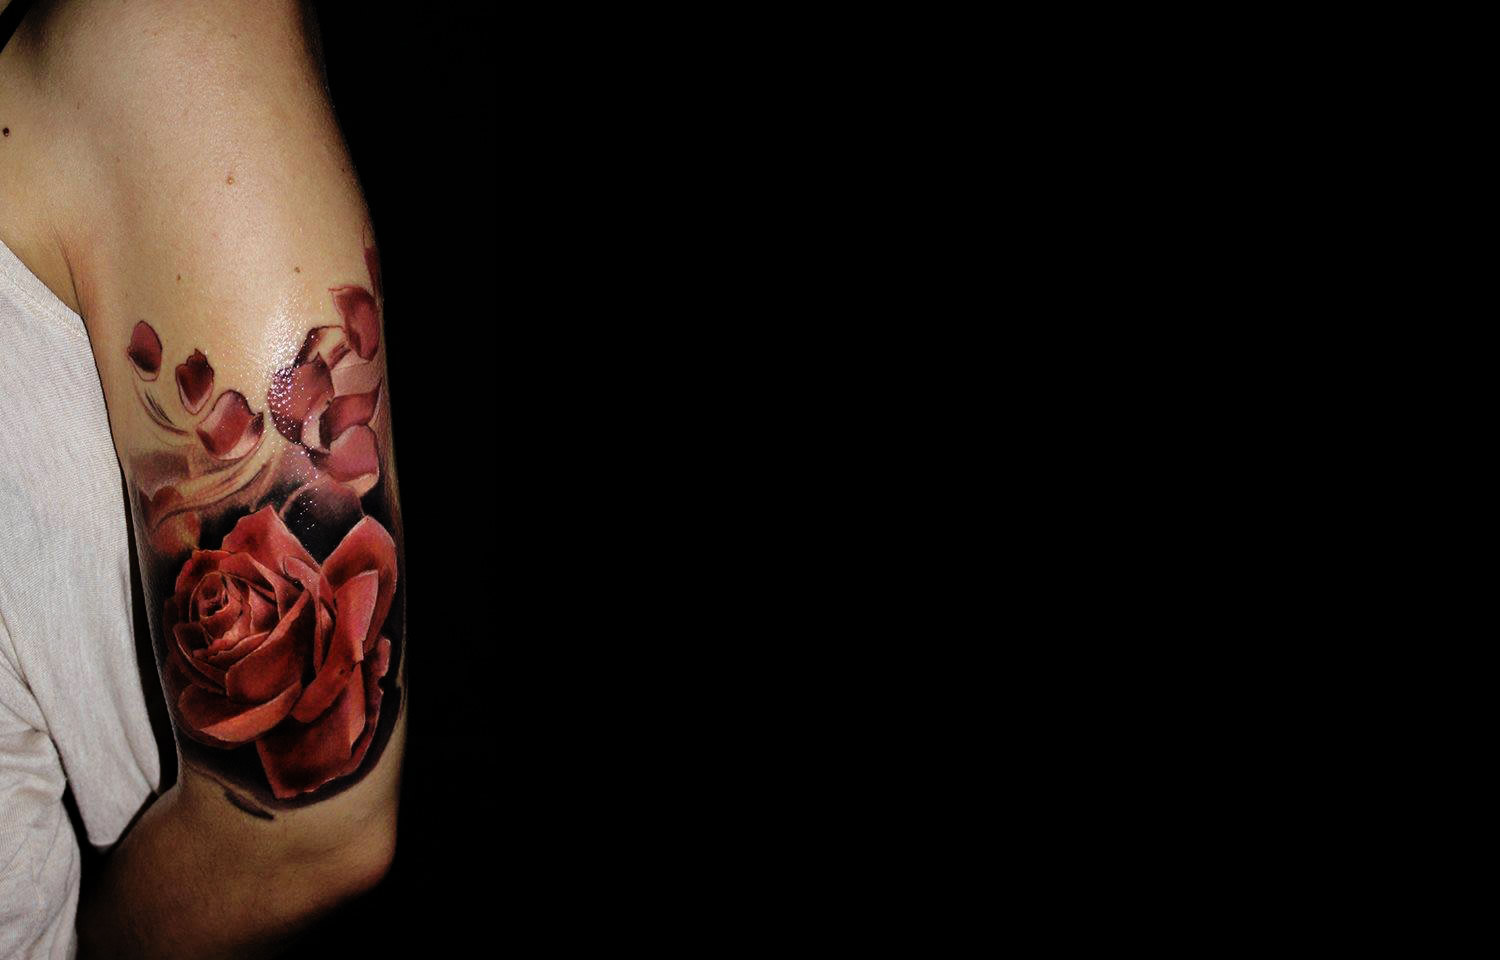 rose on arm, tattoo by Piranha Tattoo Studios